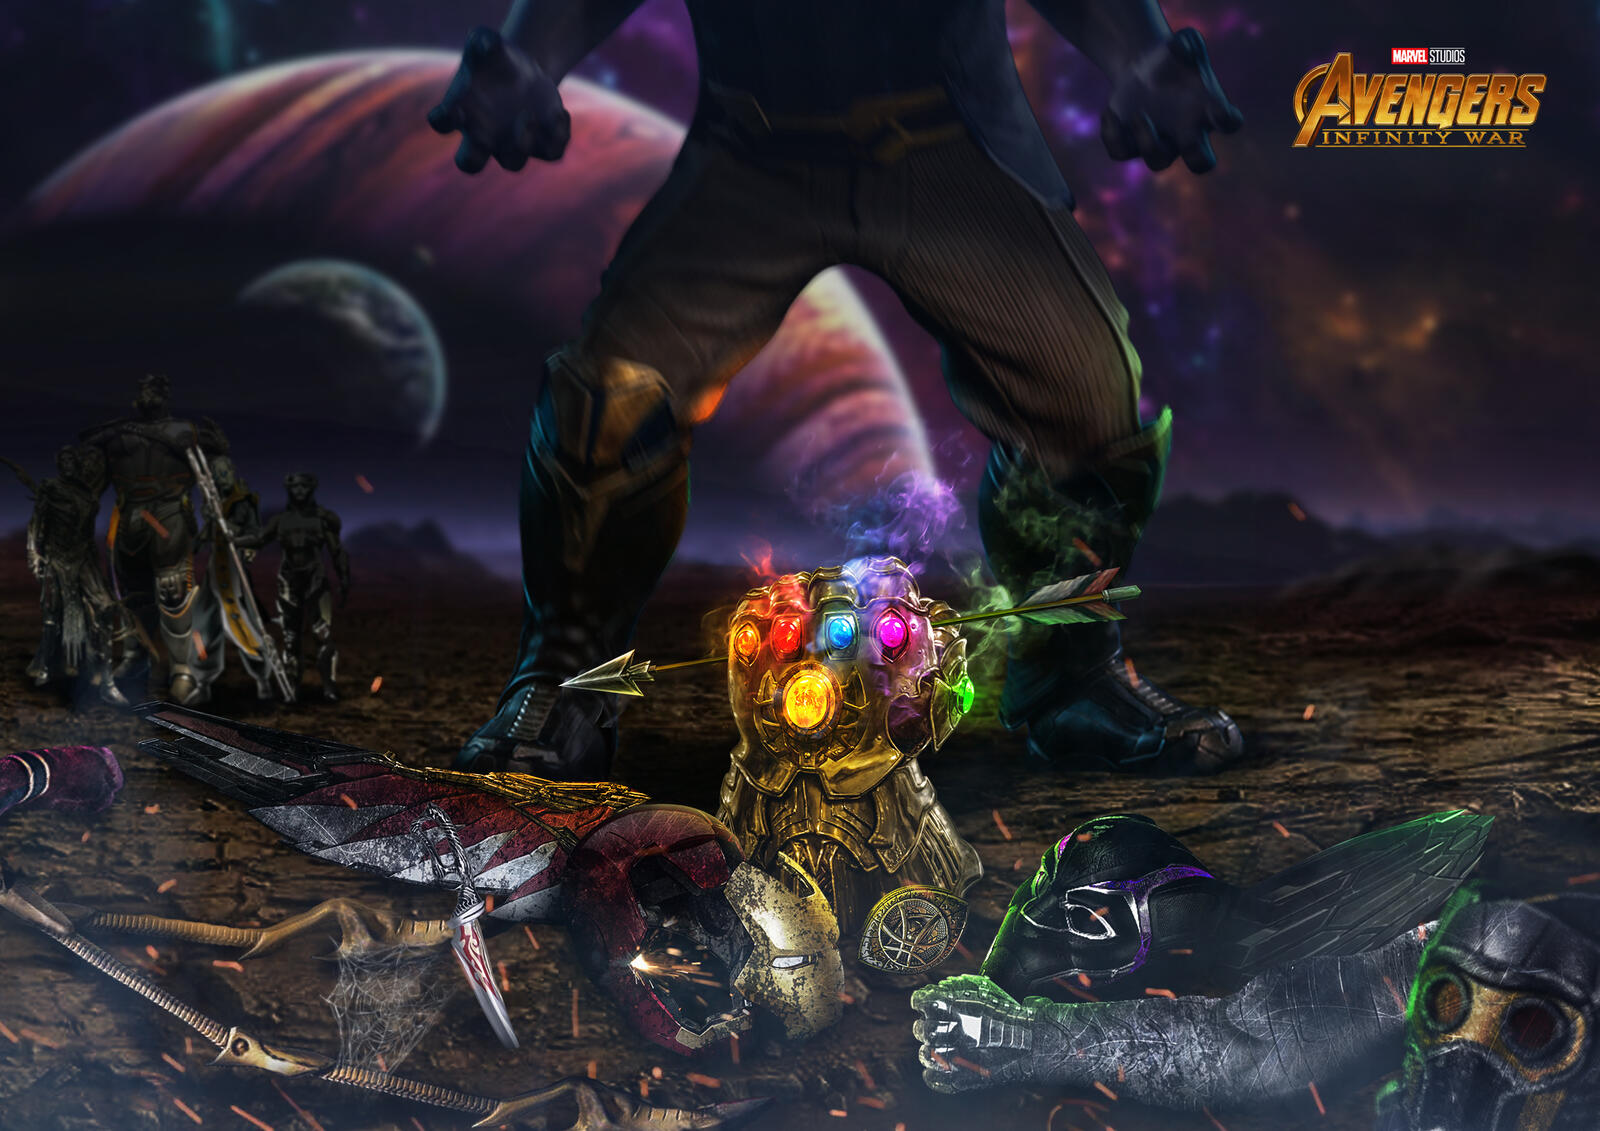 Wallpapers Avengers Infinity War superheroes rendering on the desktop